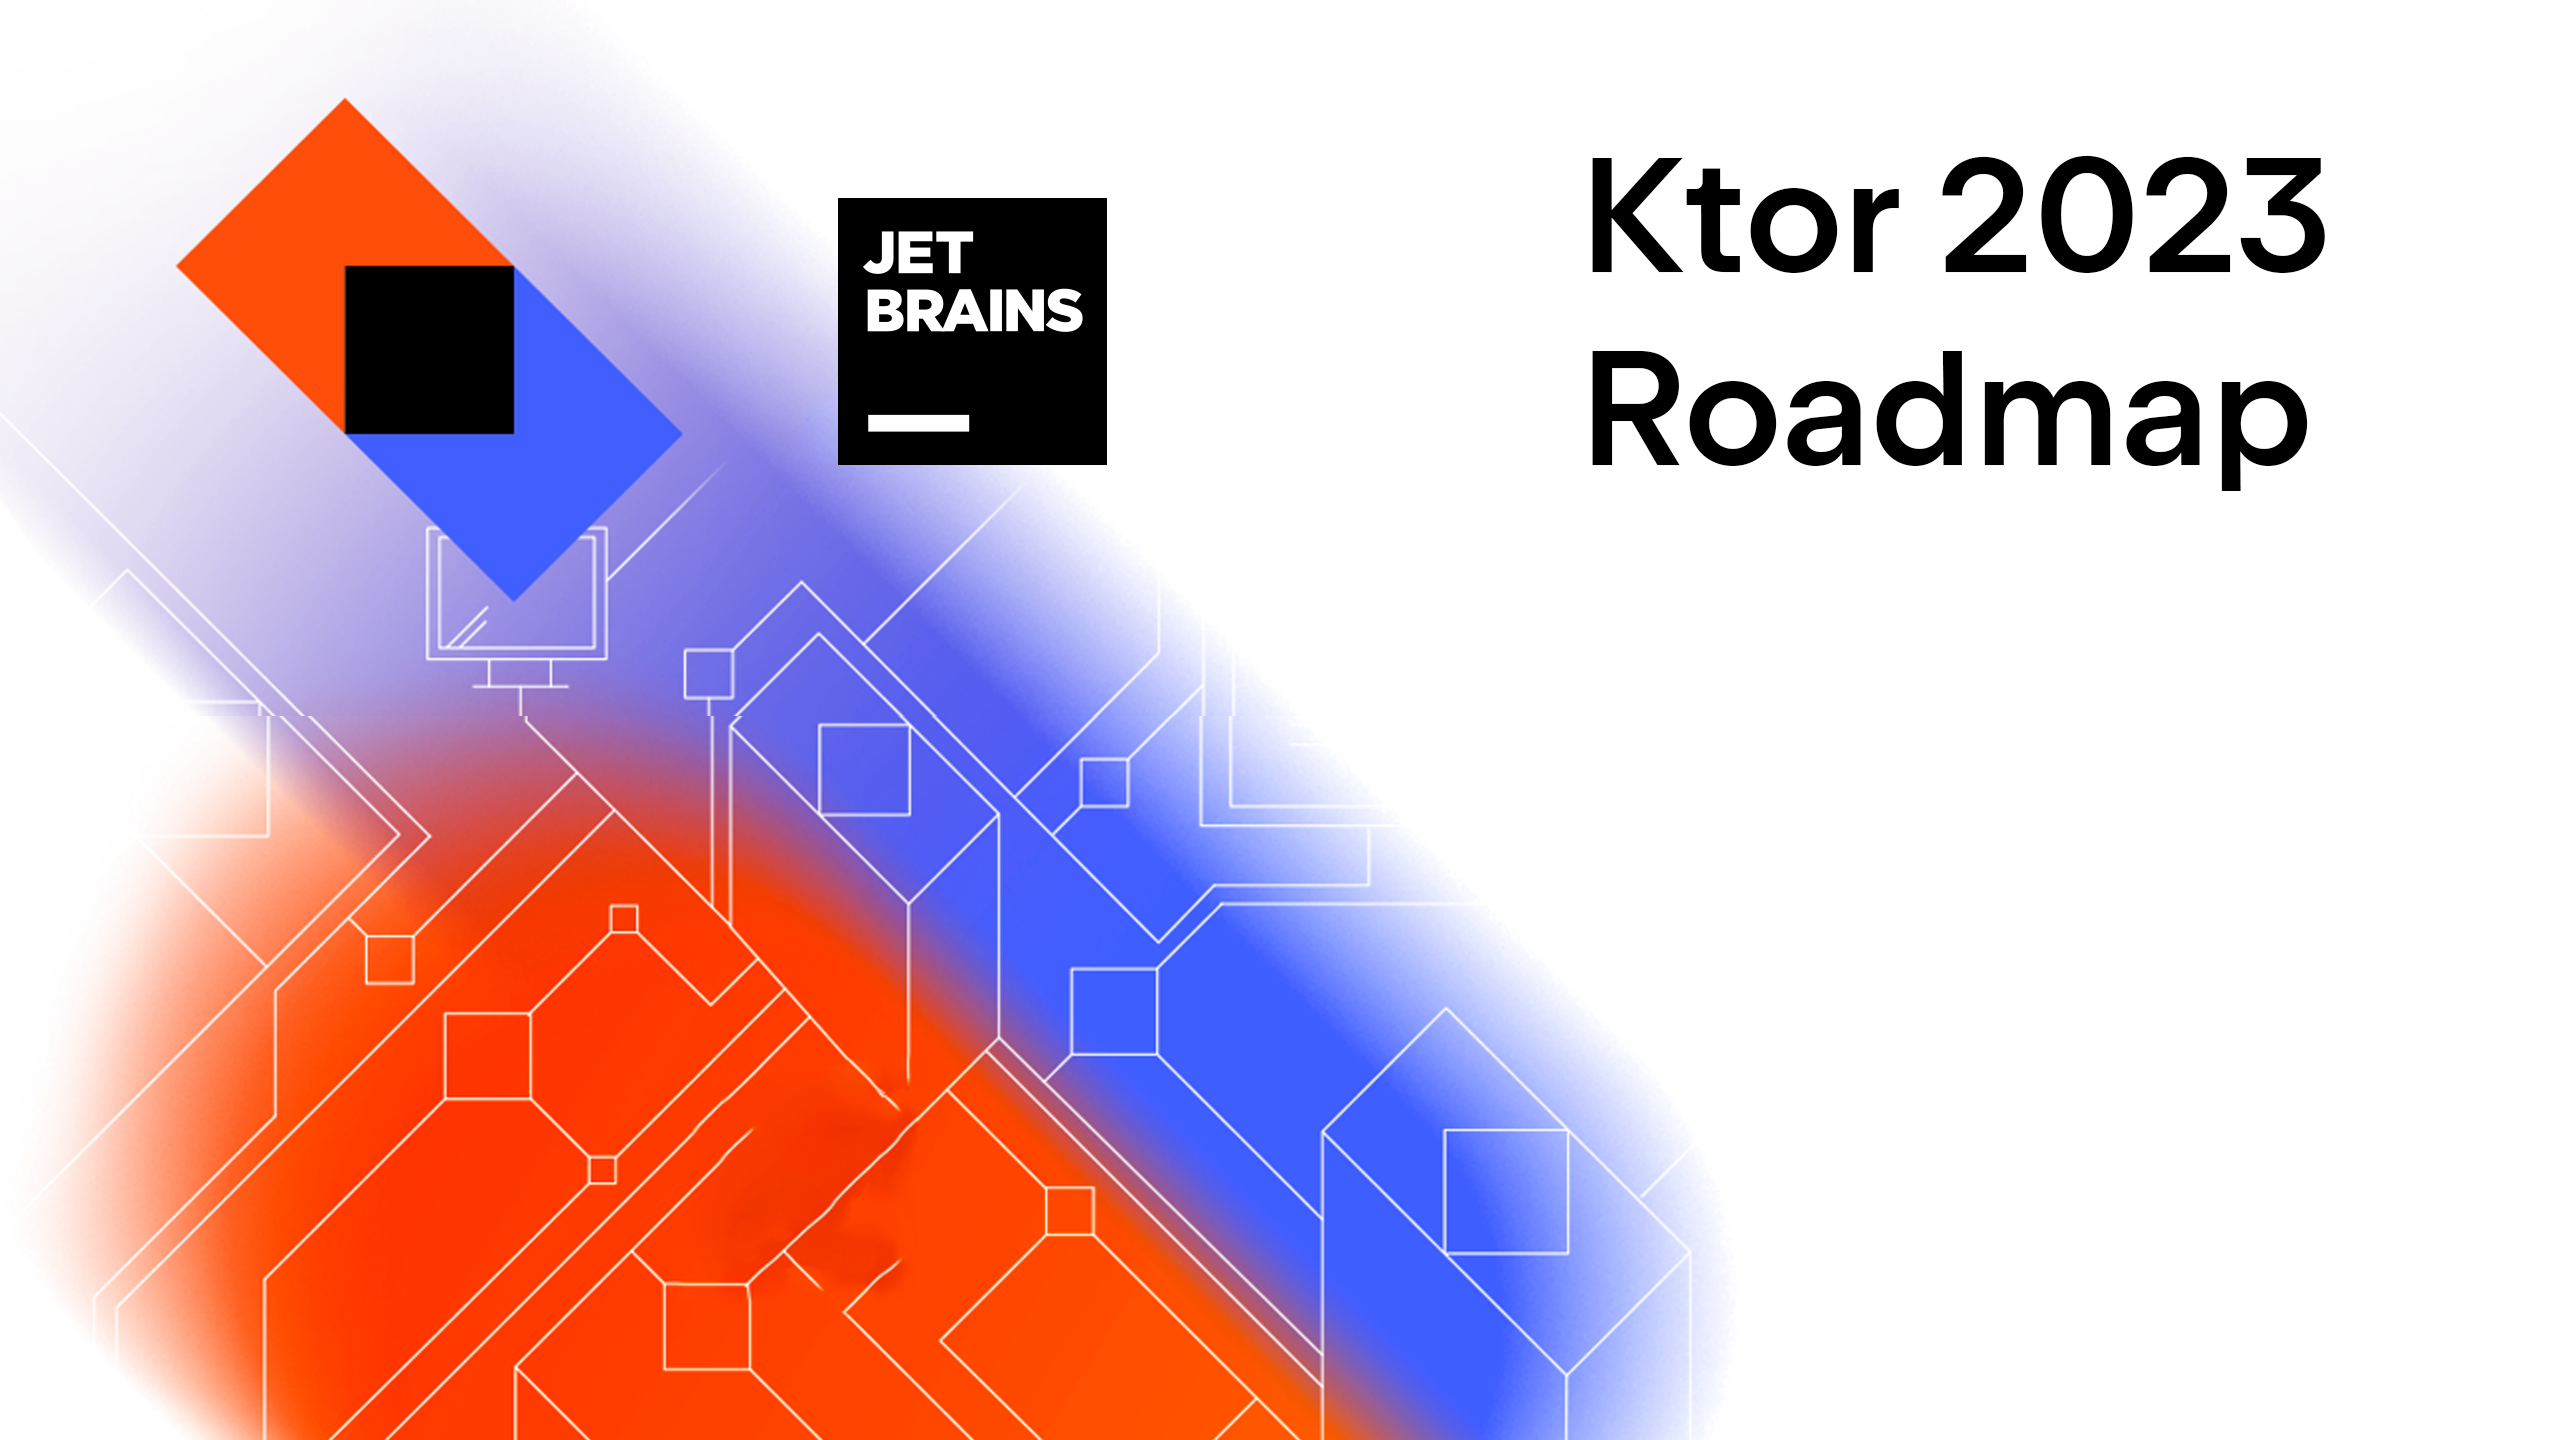 Ktor 2023 Roadmap The Ktor Blog